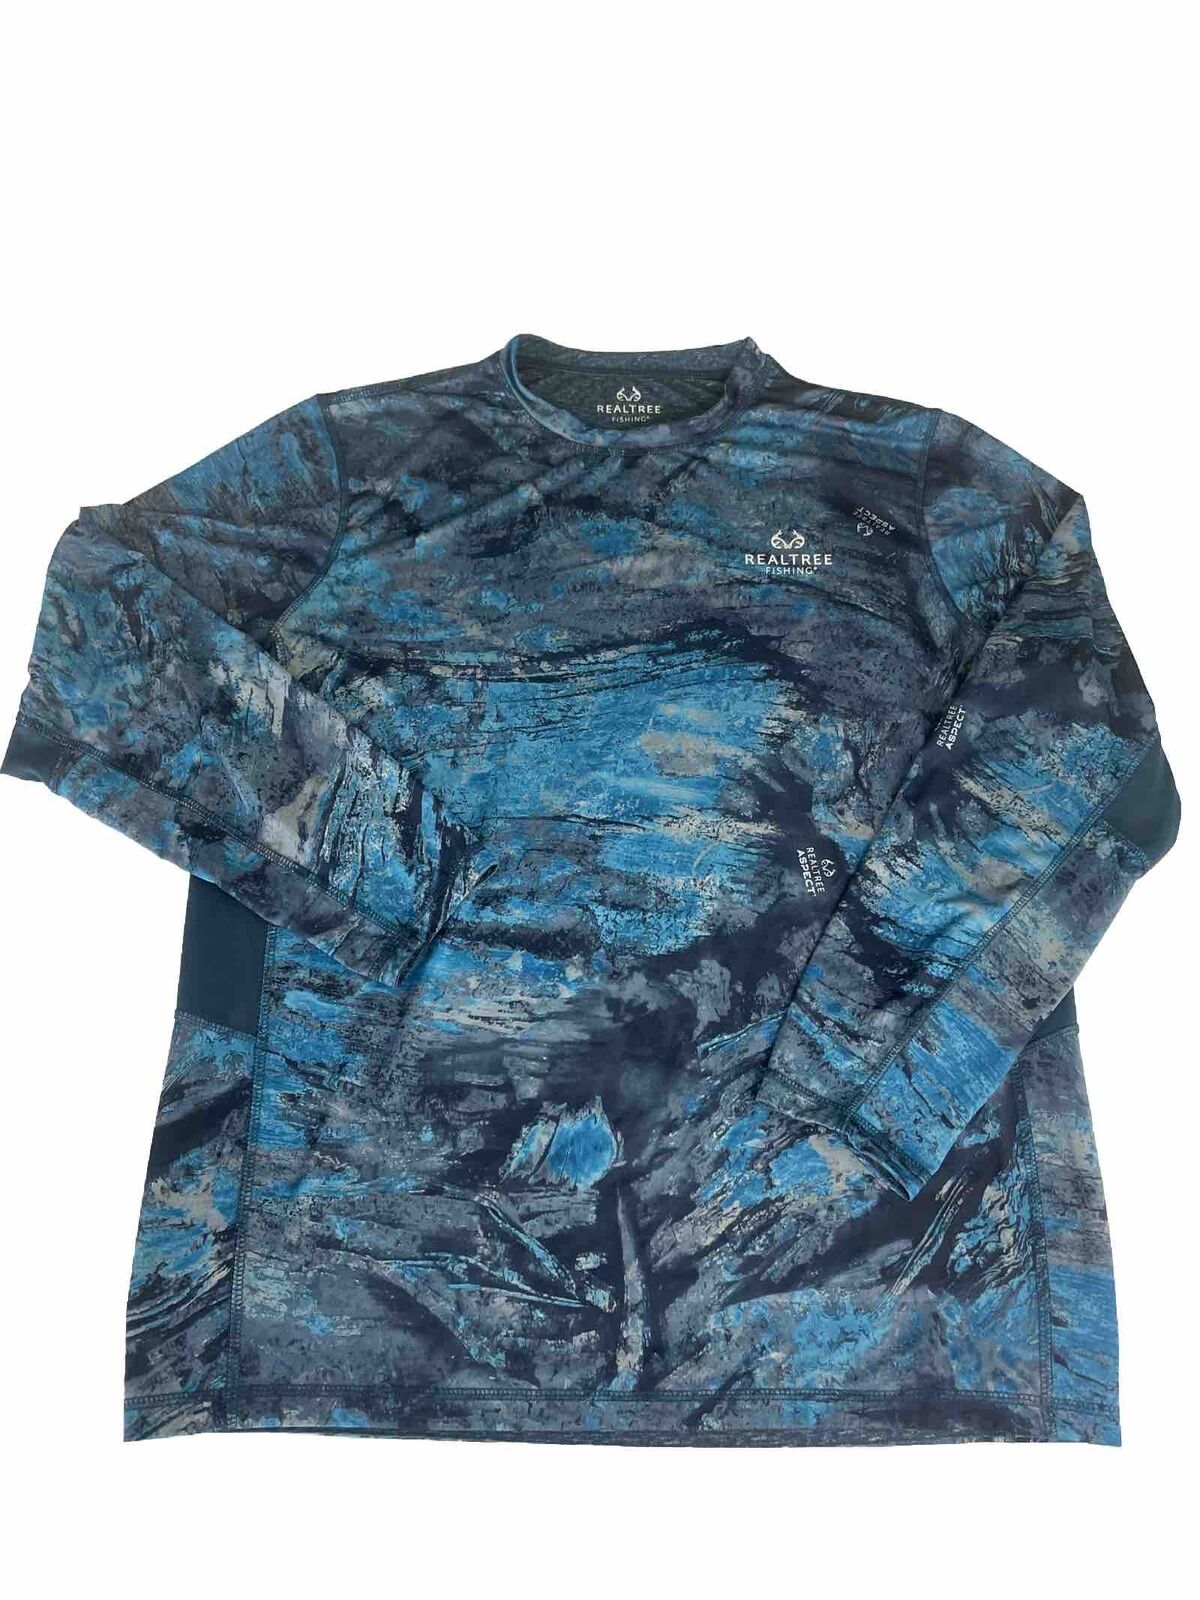 Realtree Aspect Fishing Mens Shirt Size XL Blue Wave Camo Long Sleeve Logo